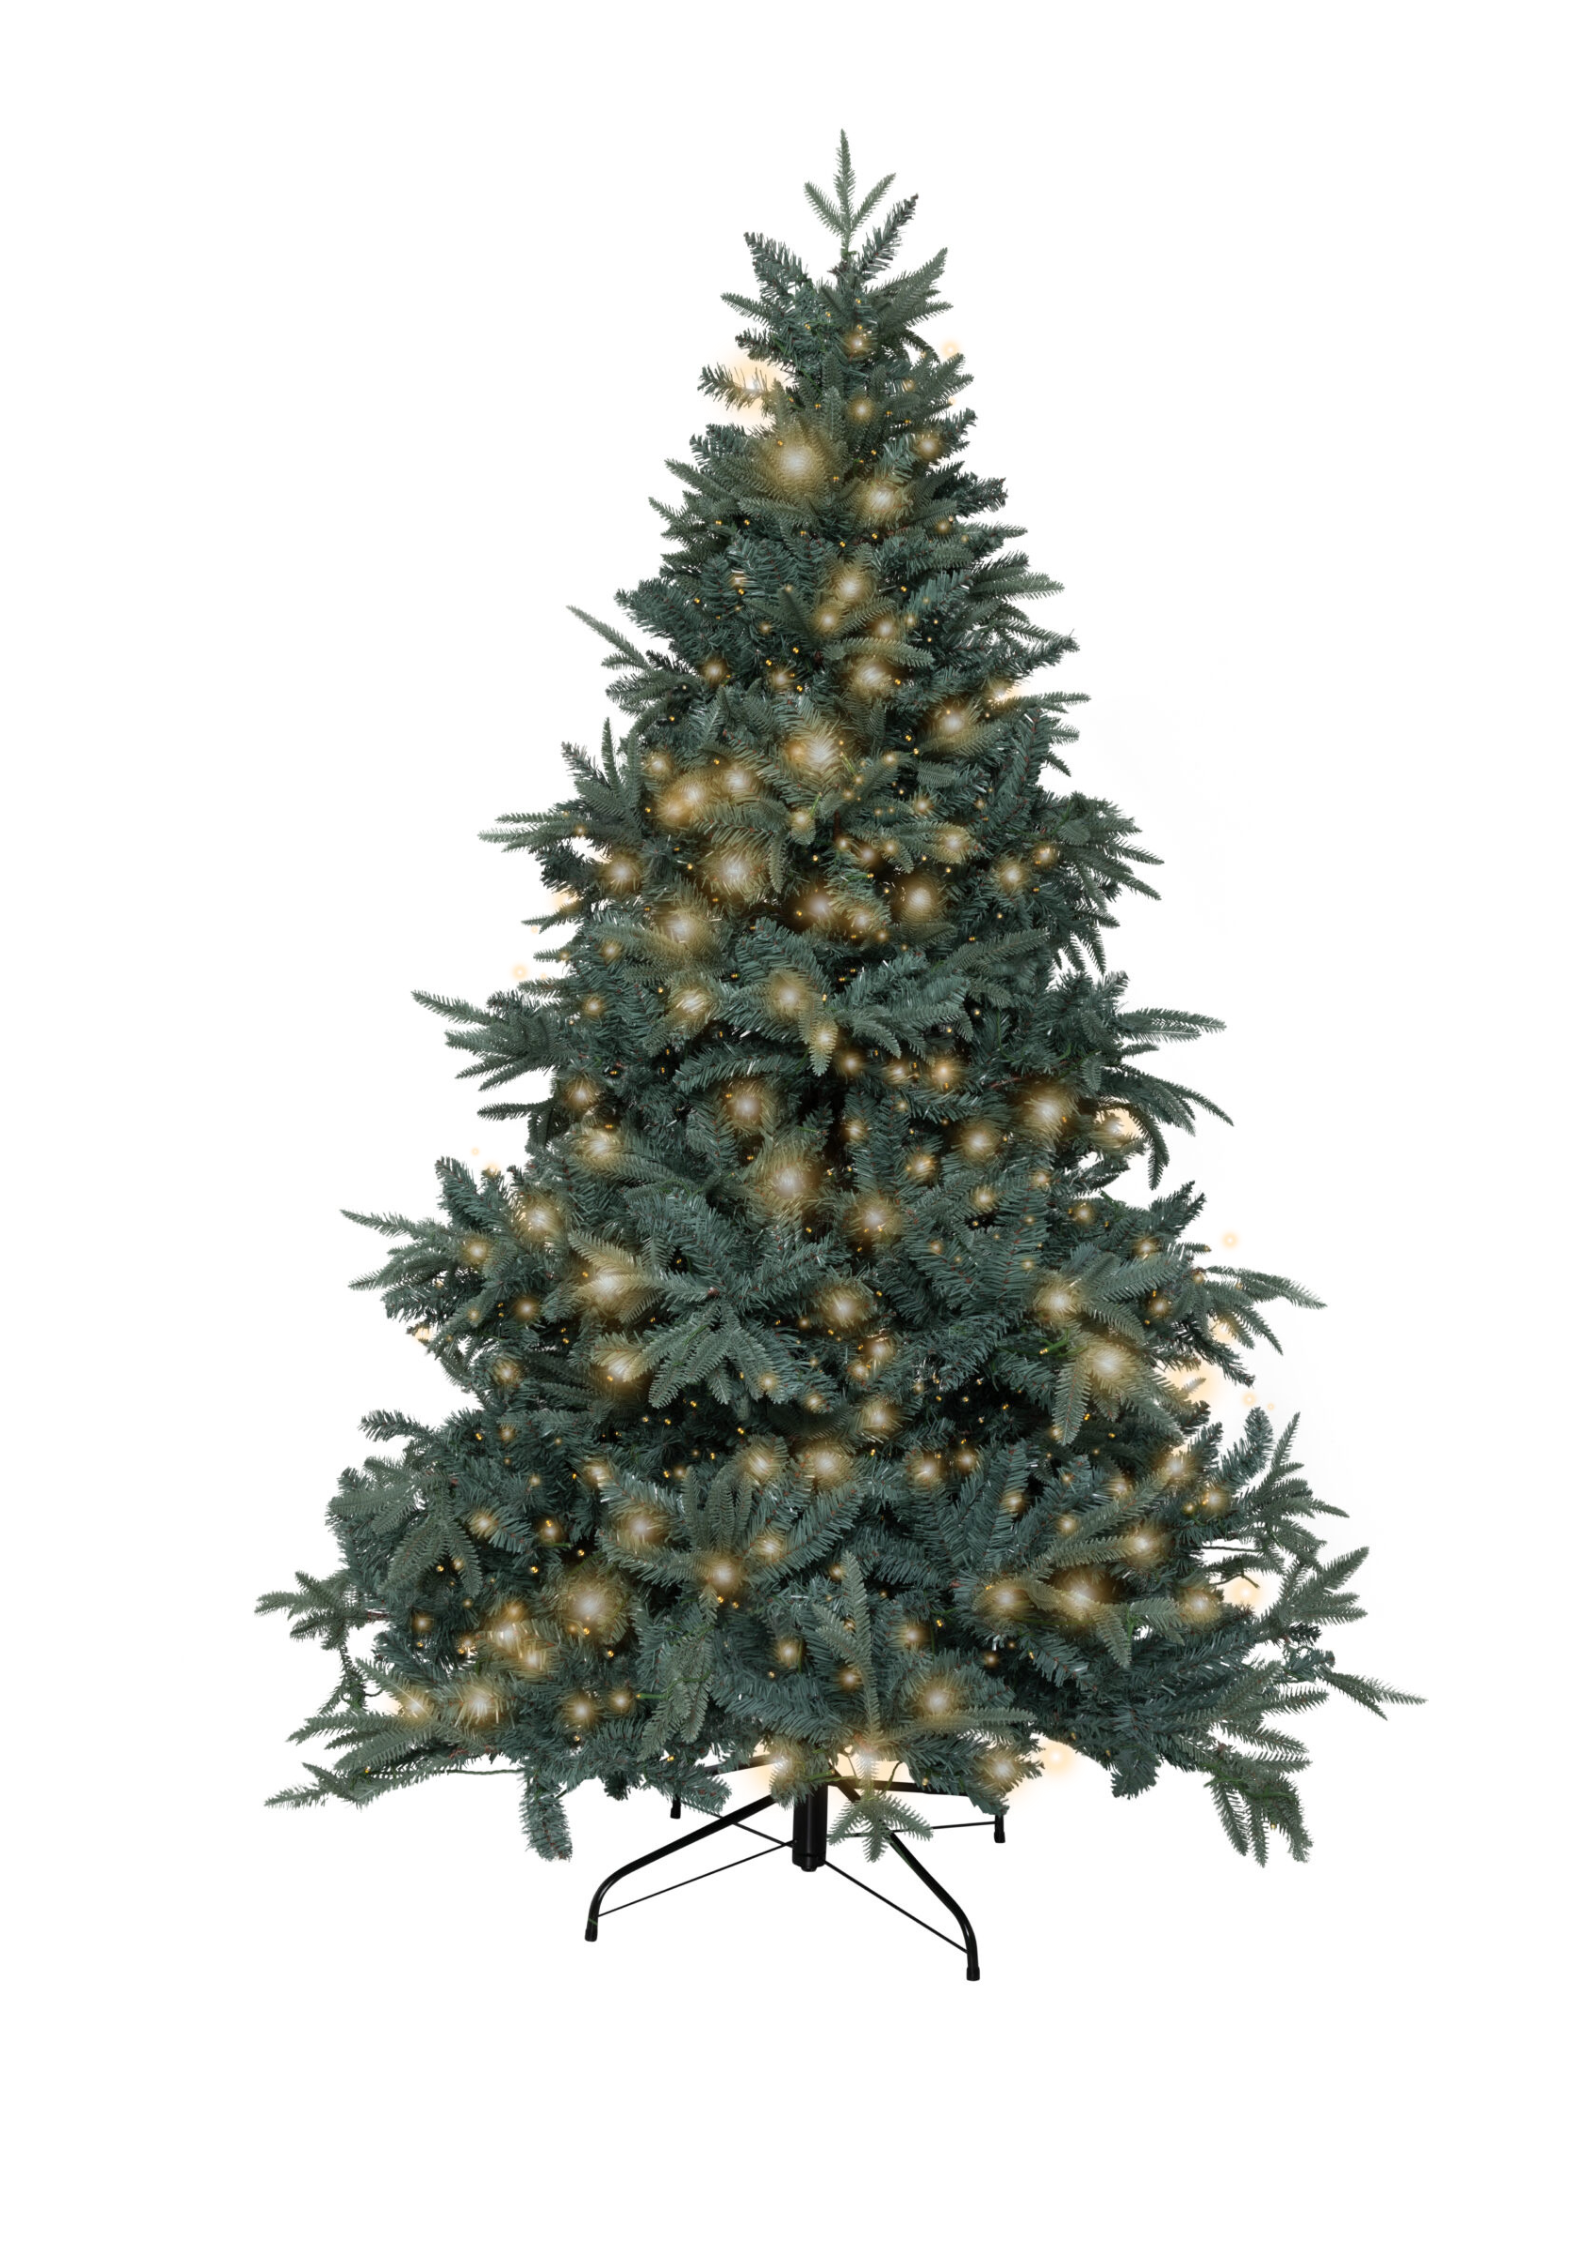 Tisdale blauwspar kerstboom verlichting KJ Kunstkerstbomen